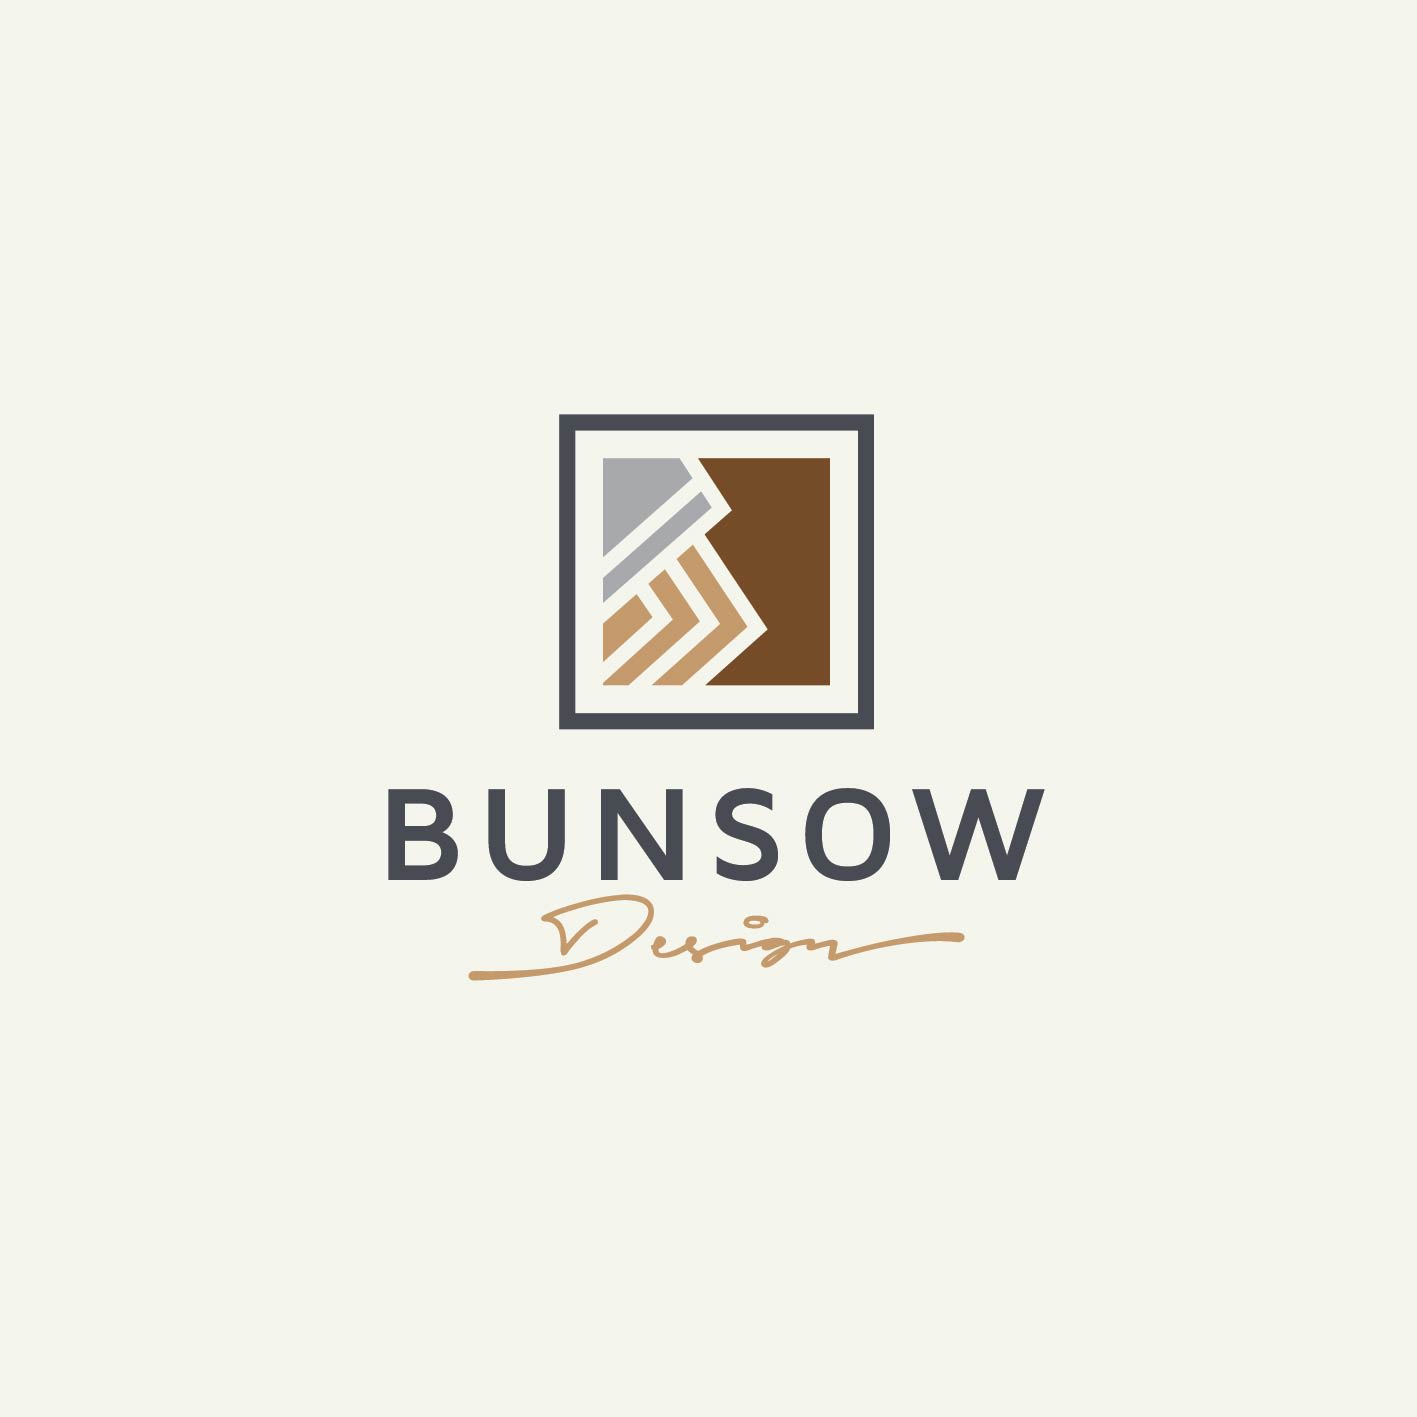 Bunsow Designs